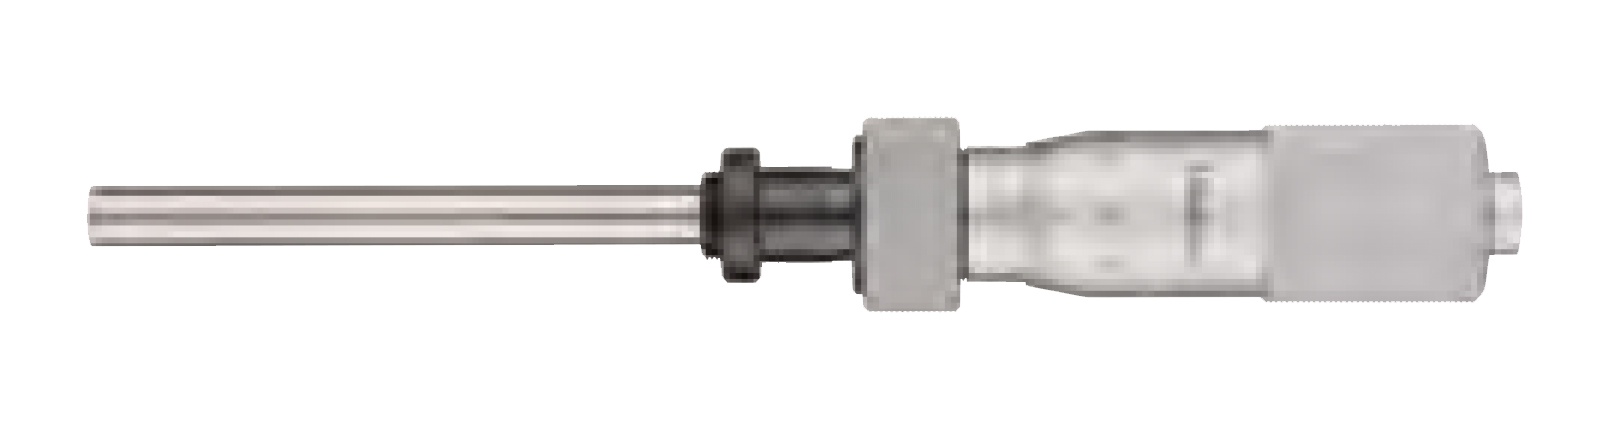 Micrometer Heads SERIES 150 — Medium-sized Standard Type (150-224) 